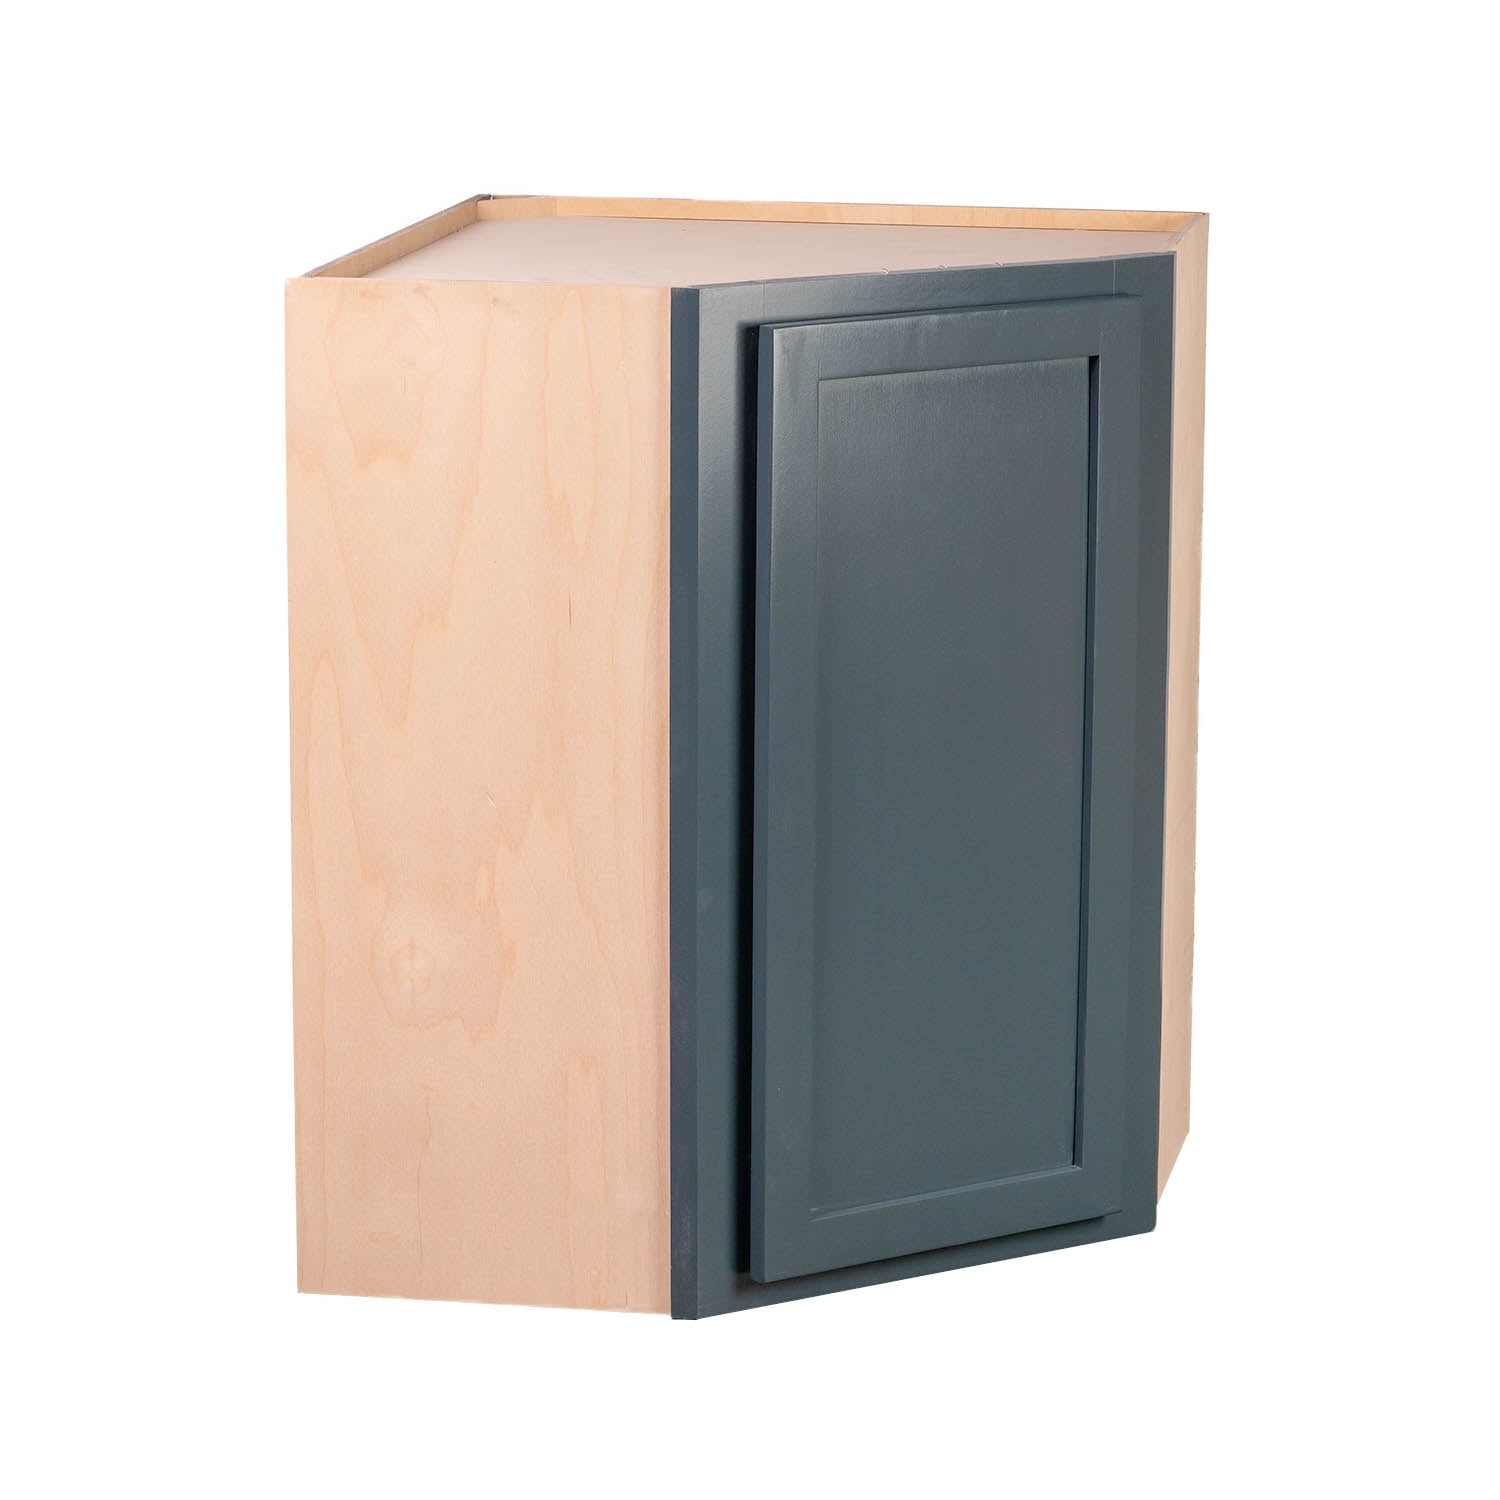 EB10-WS42 Northfield Cotton WS42 - Knick Knack Wall Shelves - RTA Kitchen  Cabinets